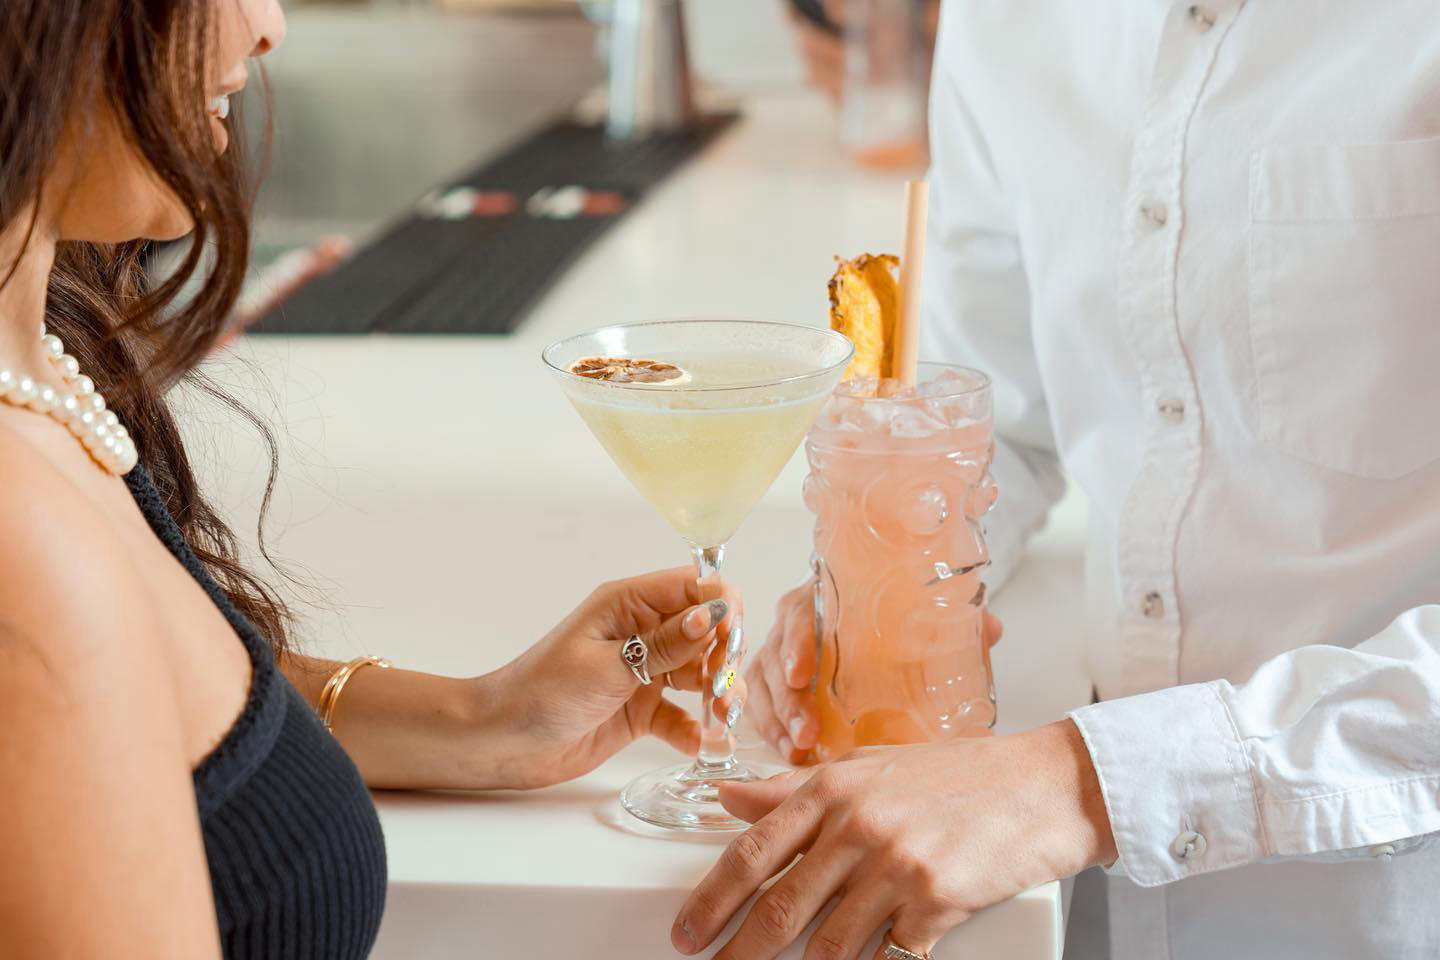 Hilton Cabana Miami Beach - The cocktails at #HiltonCabana's Allison Bar are a MUST TRY